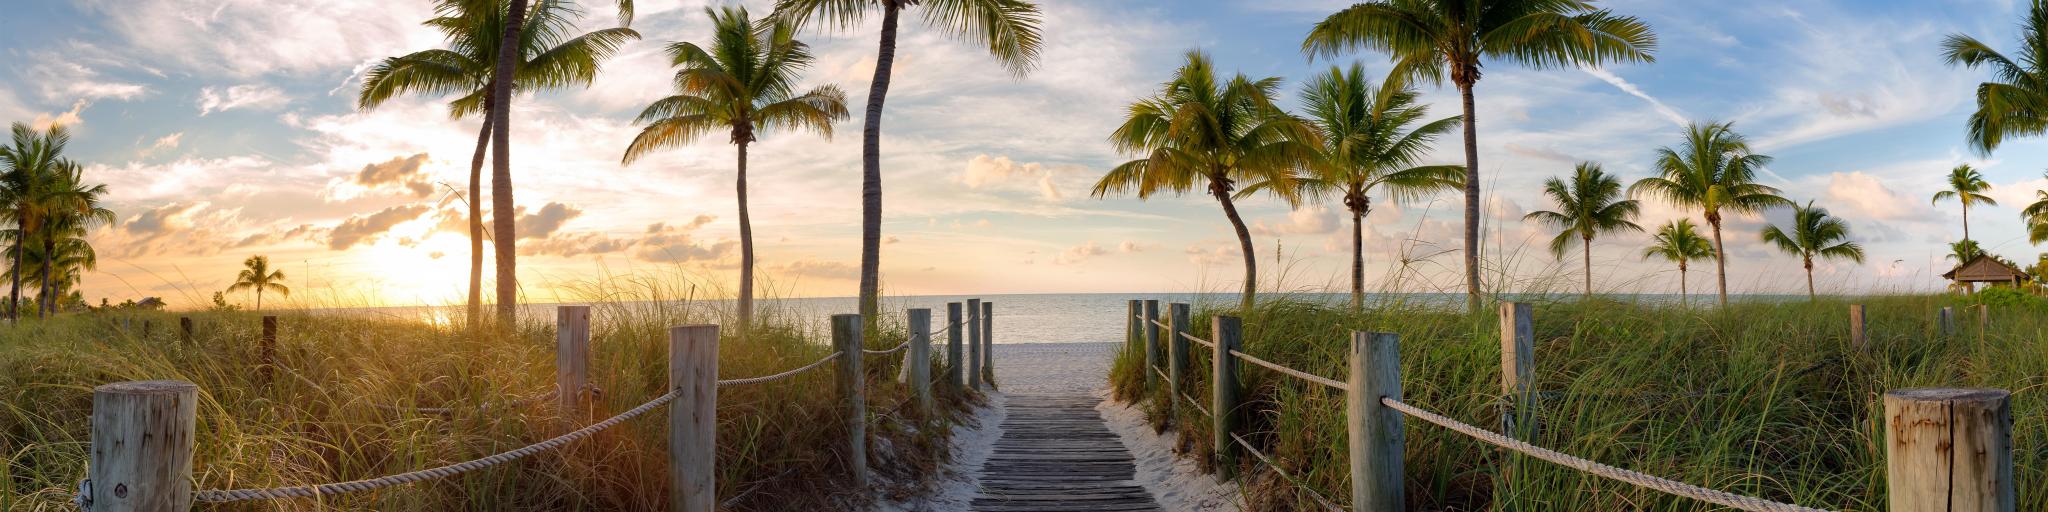 Panorama view of footbridge to the Smathers beach at sunrise - Key West, Florida, USA.